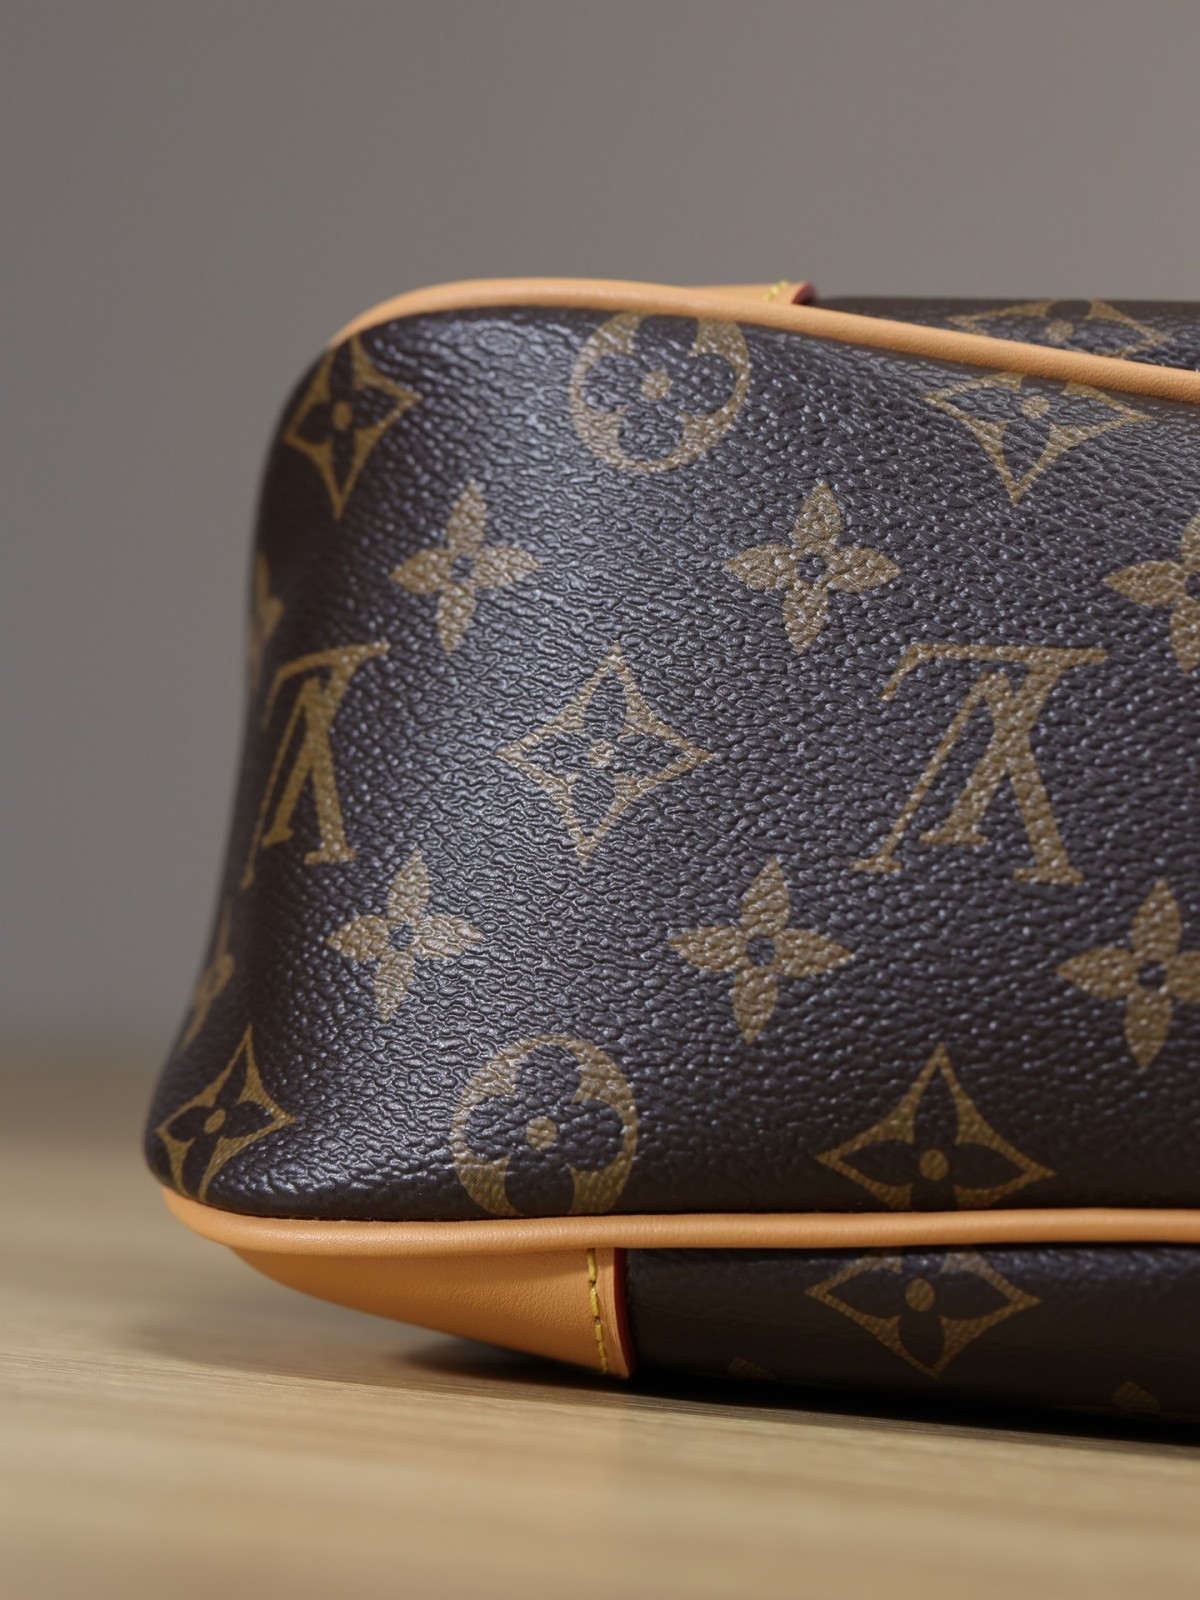 How good quality is a Shebag replica Louis Vuitton Boulogne bag? (2023 updated)-ਵਧੀਆ ਕੁਆਲਿਟੀ ਨਕਲੀ ਲੁਈਸ ਵਿਟਨ ਬੈਗ ਔਨਲਾਈਨ ਸਟੋਰ, ਰਿਪਲੀਕਾ ਡਿਜ਼ਾਈਨਰ ਬੈਗ ru